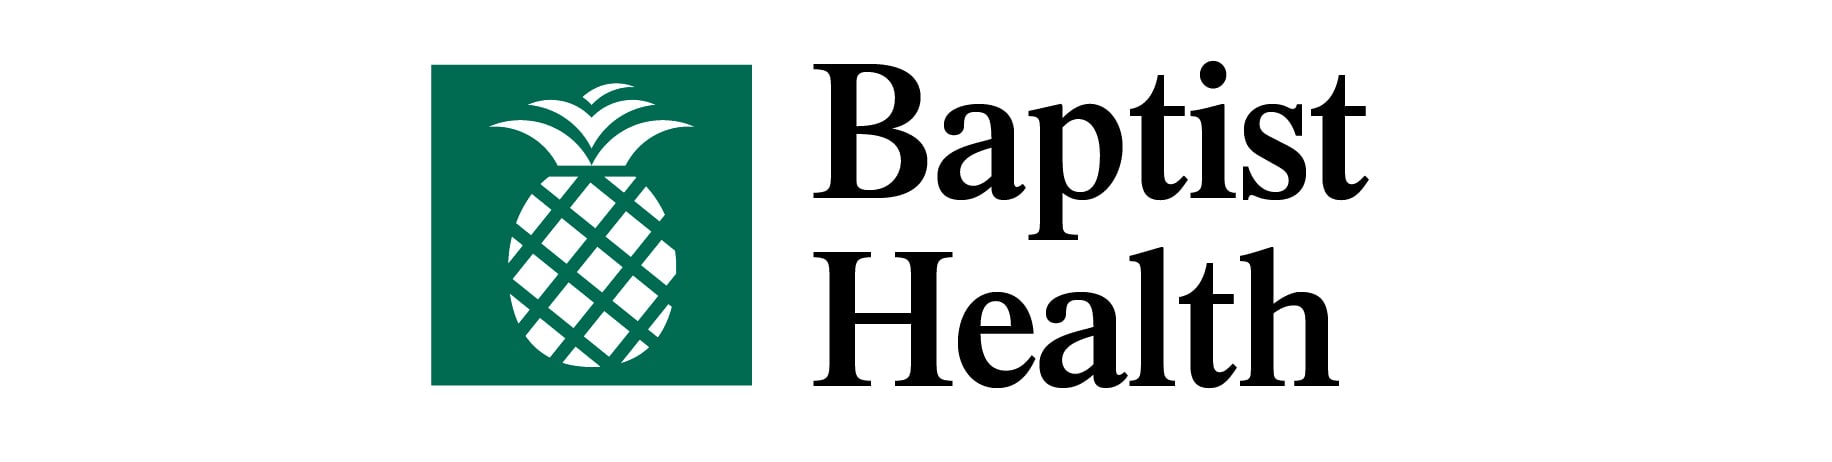 Baptist_Health_stacked-1